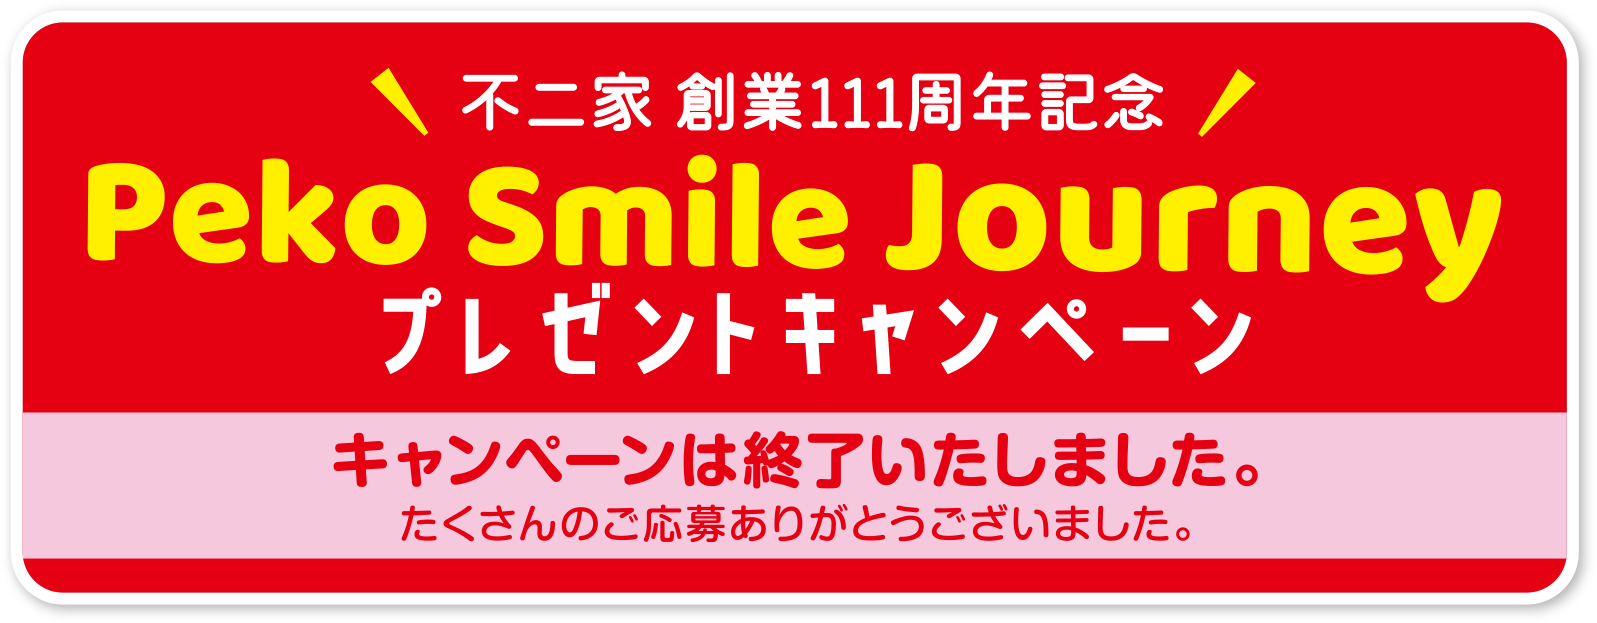 Peko Smile Journey プレゼントキャンペーン